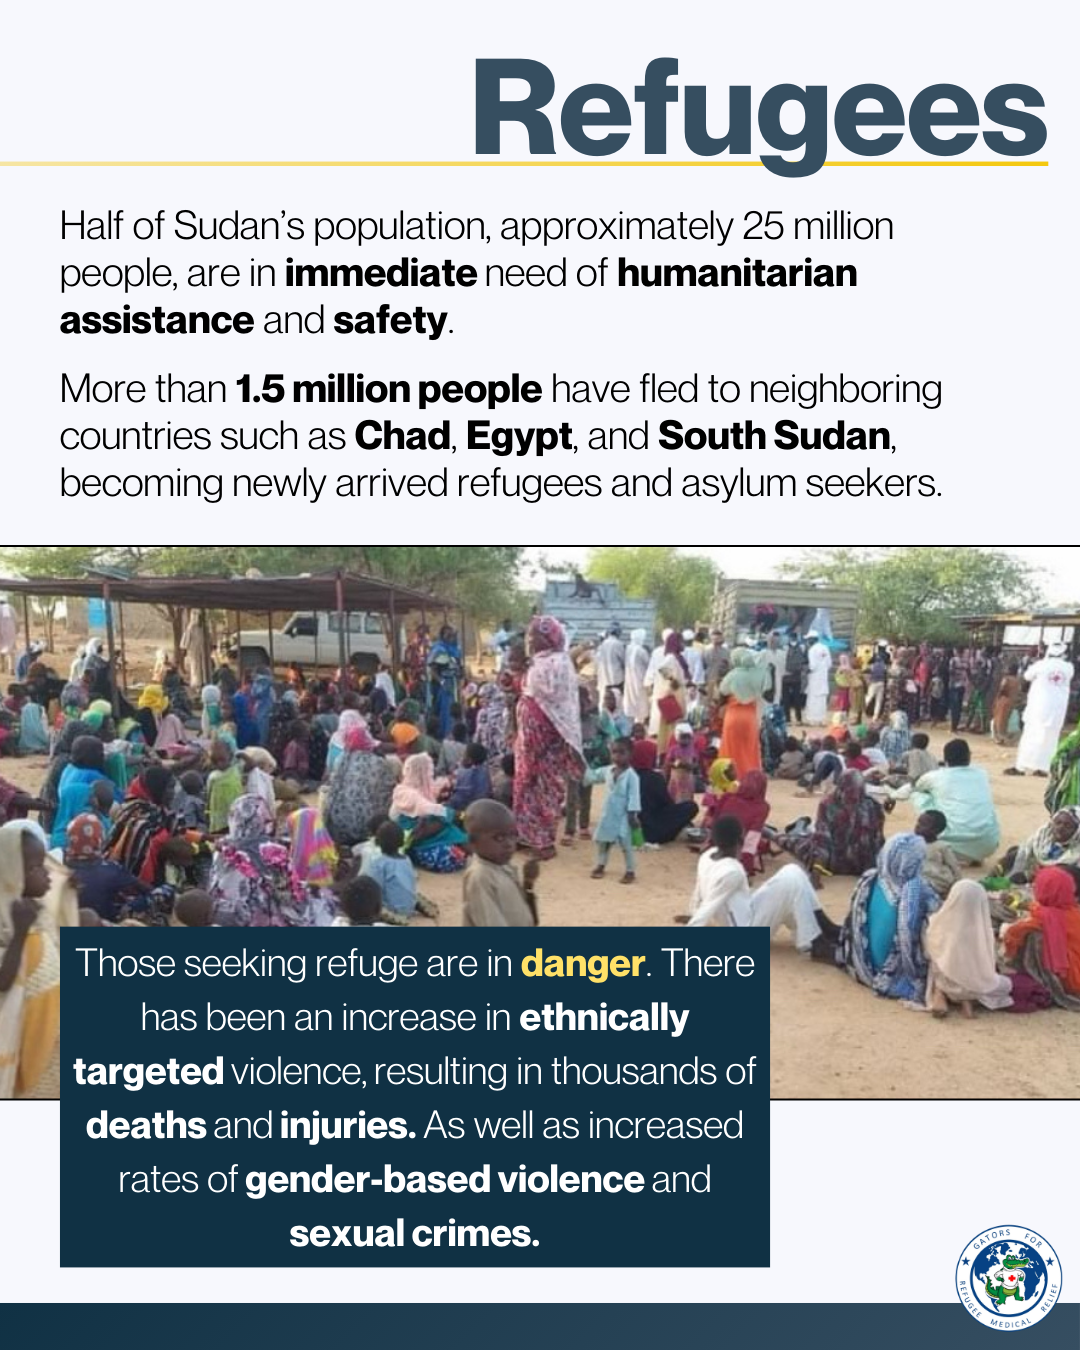 Sudan Educational Post - Refugees.png